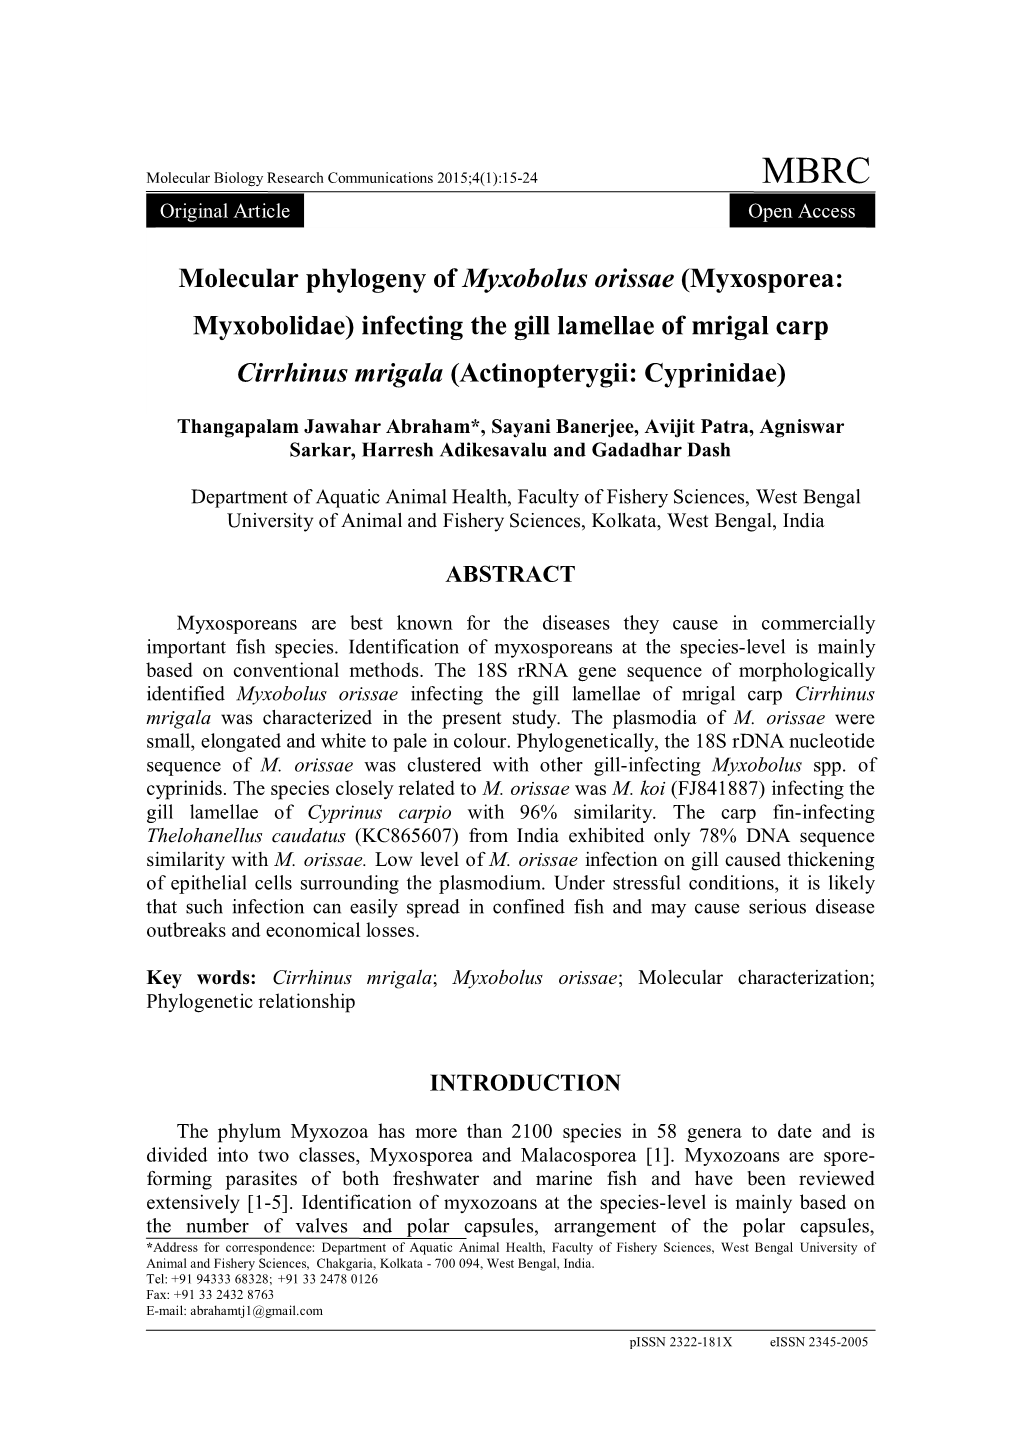 Molecular Phylogeny of Myxobolus Orissae (Myxosporea: Myxobolidae) Infecting the Gill Lamellae of Mrigal Carp